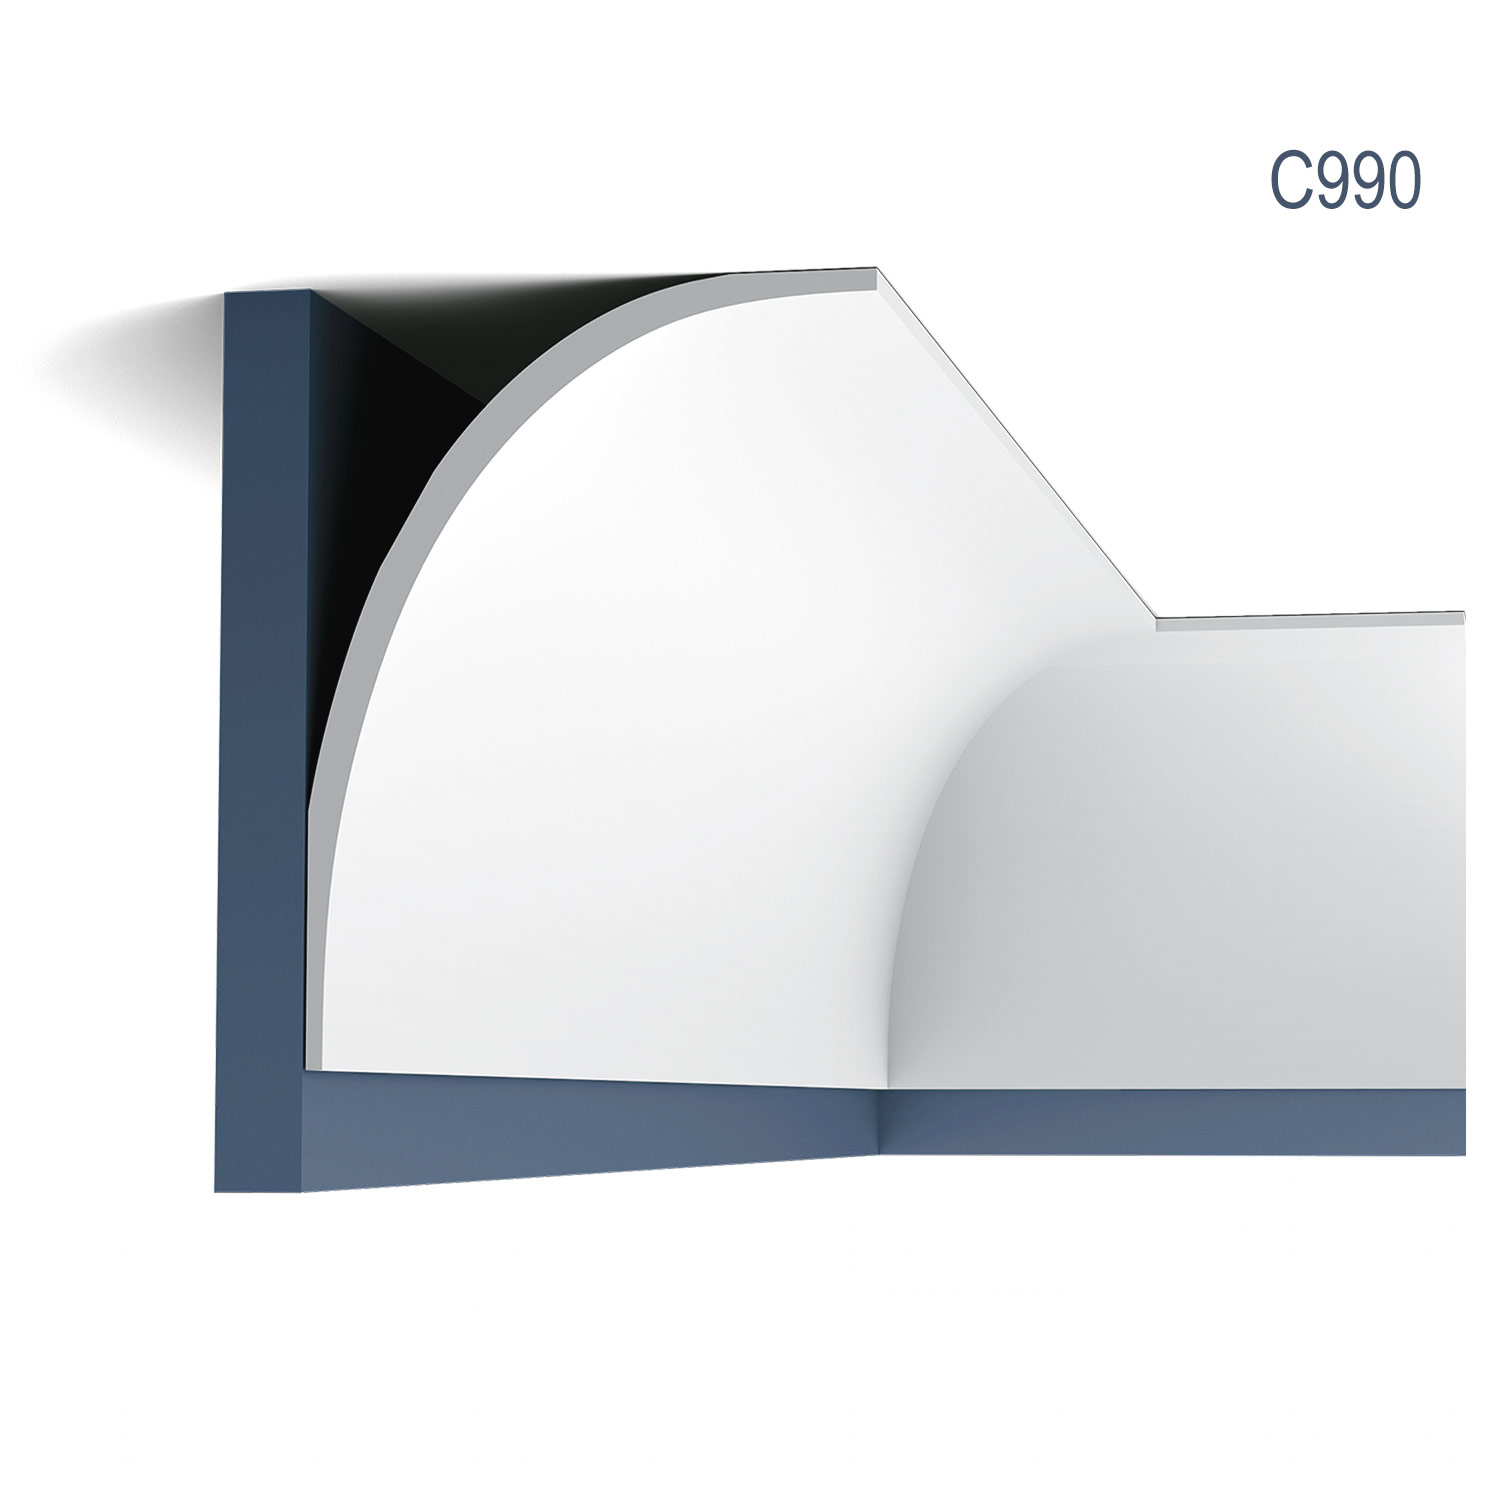 Cornisa Luxxus C990, Dimensiuni: 200 X 21.5 X 15.7 cm, Orac Decor Orac Decor